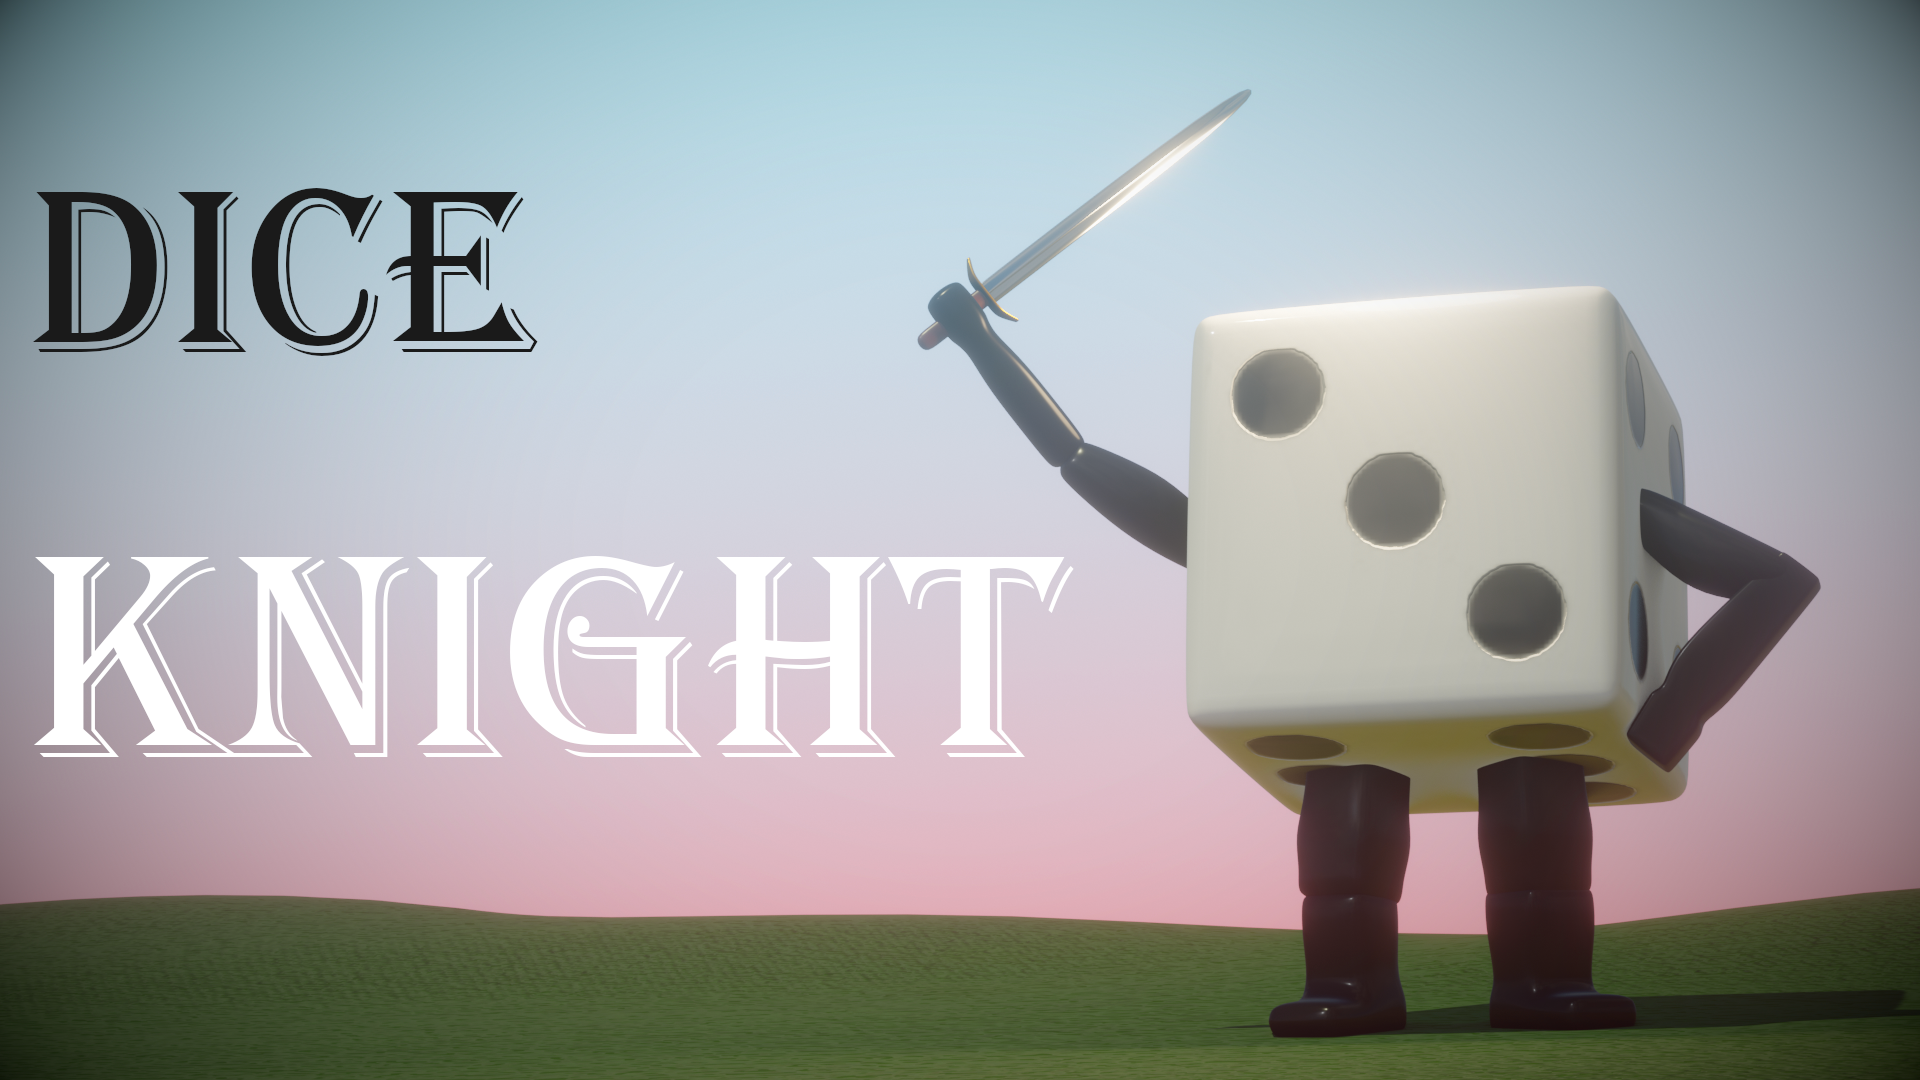 Dice Knight